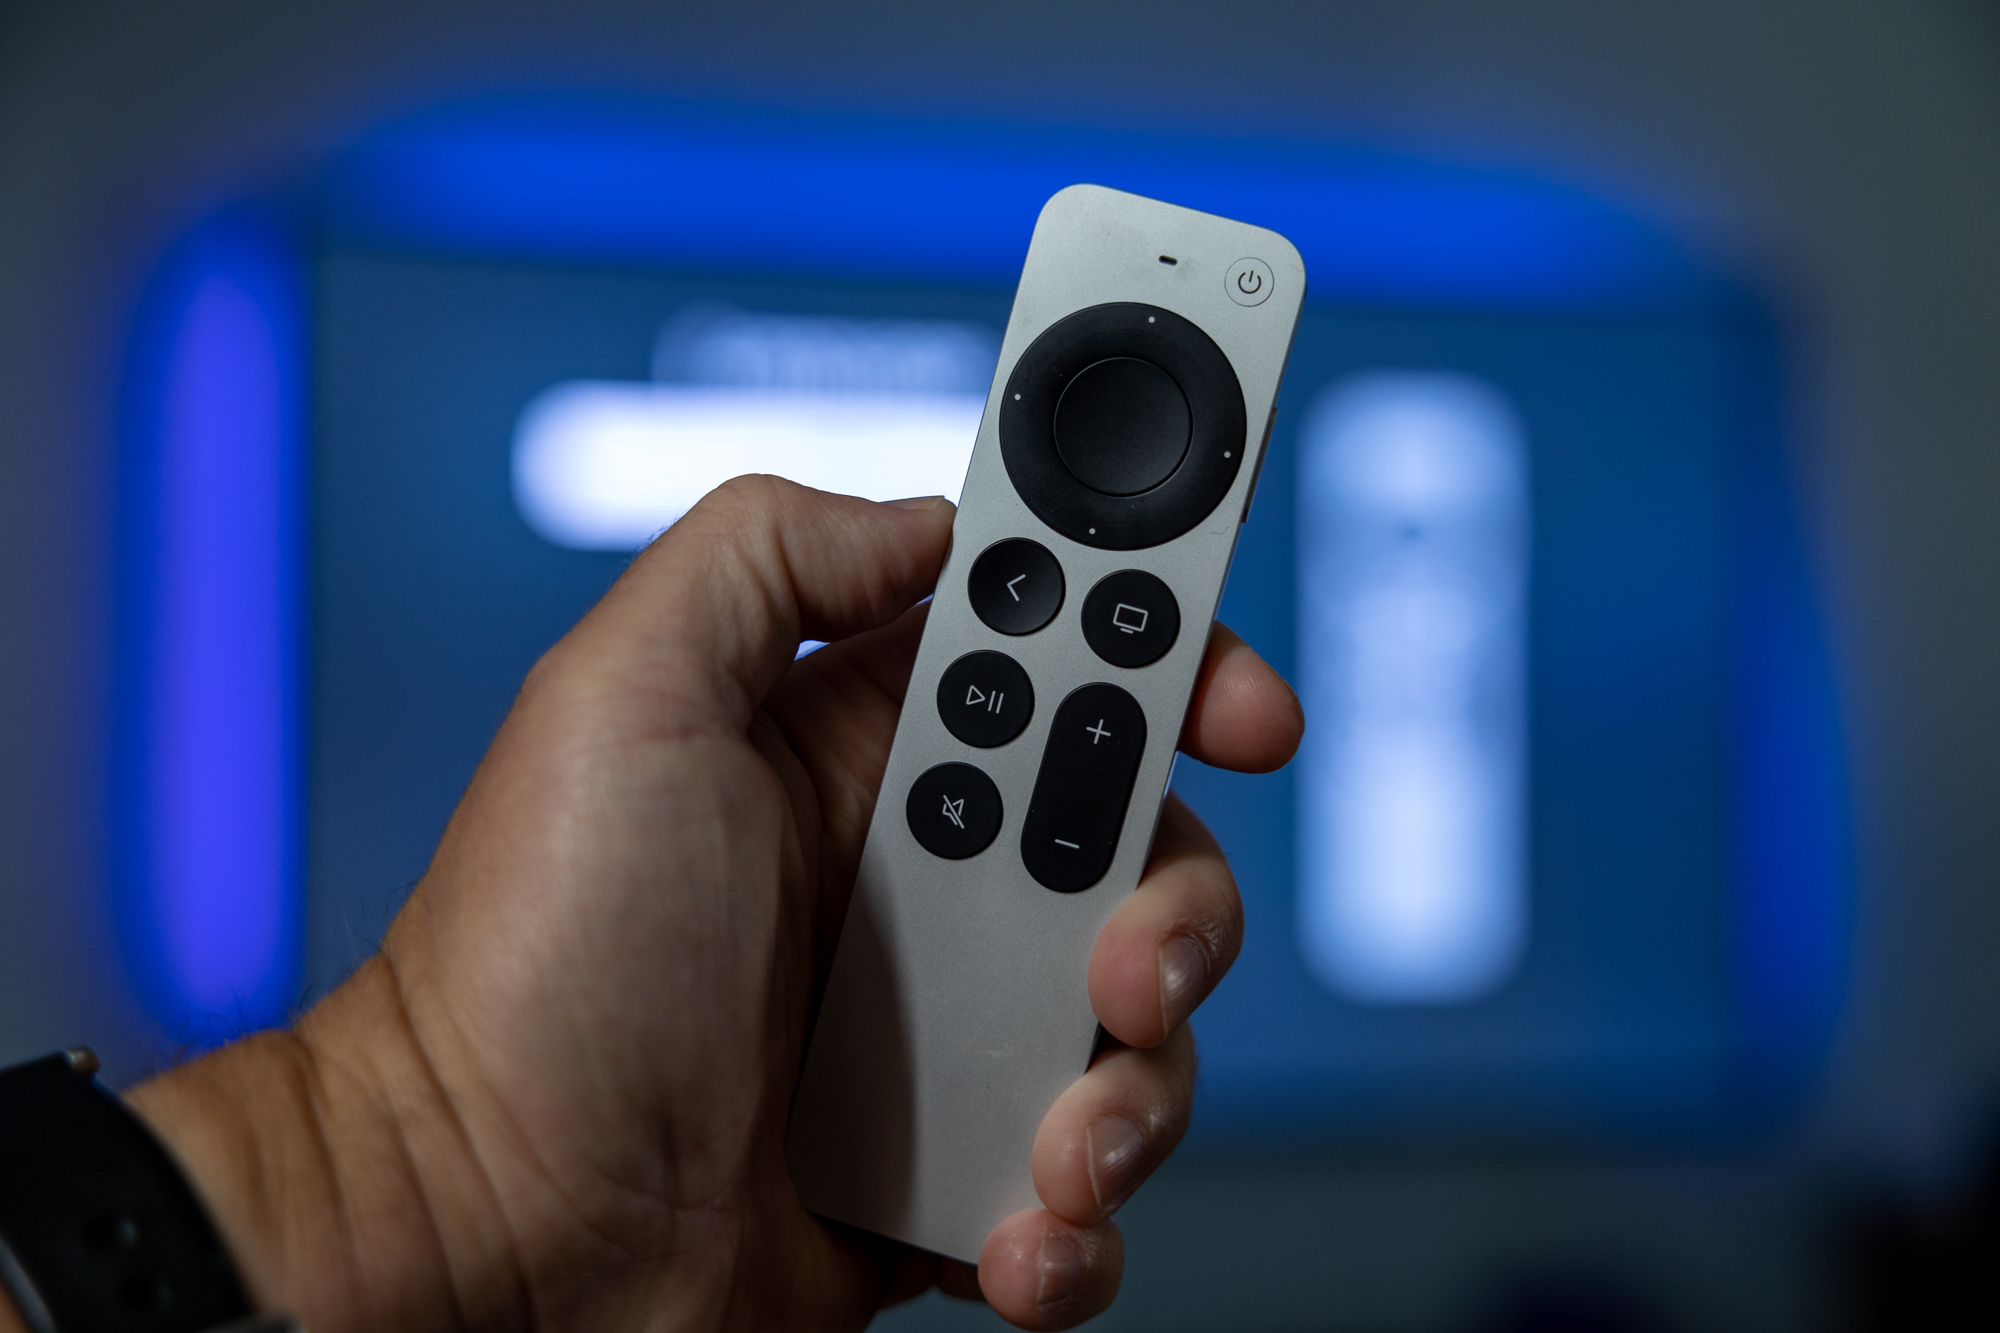 Can Alexa Control Apple TV?